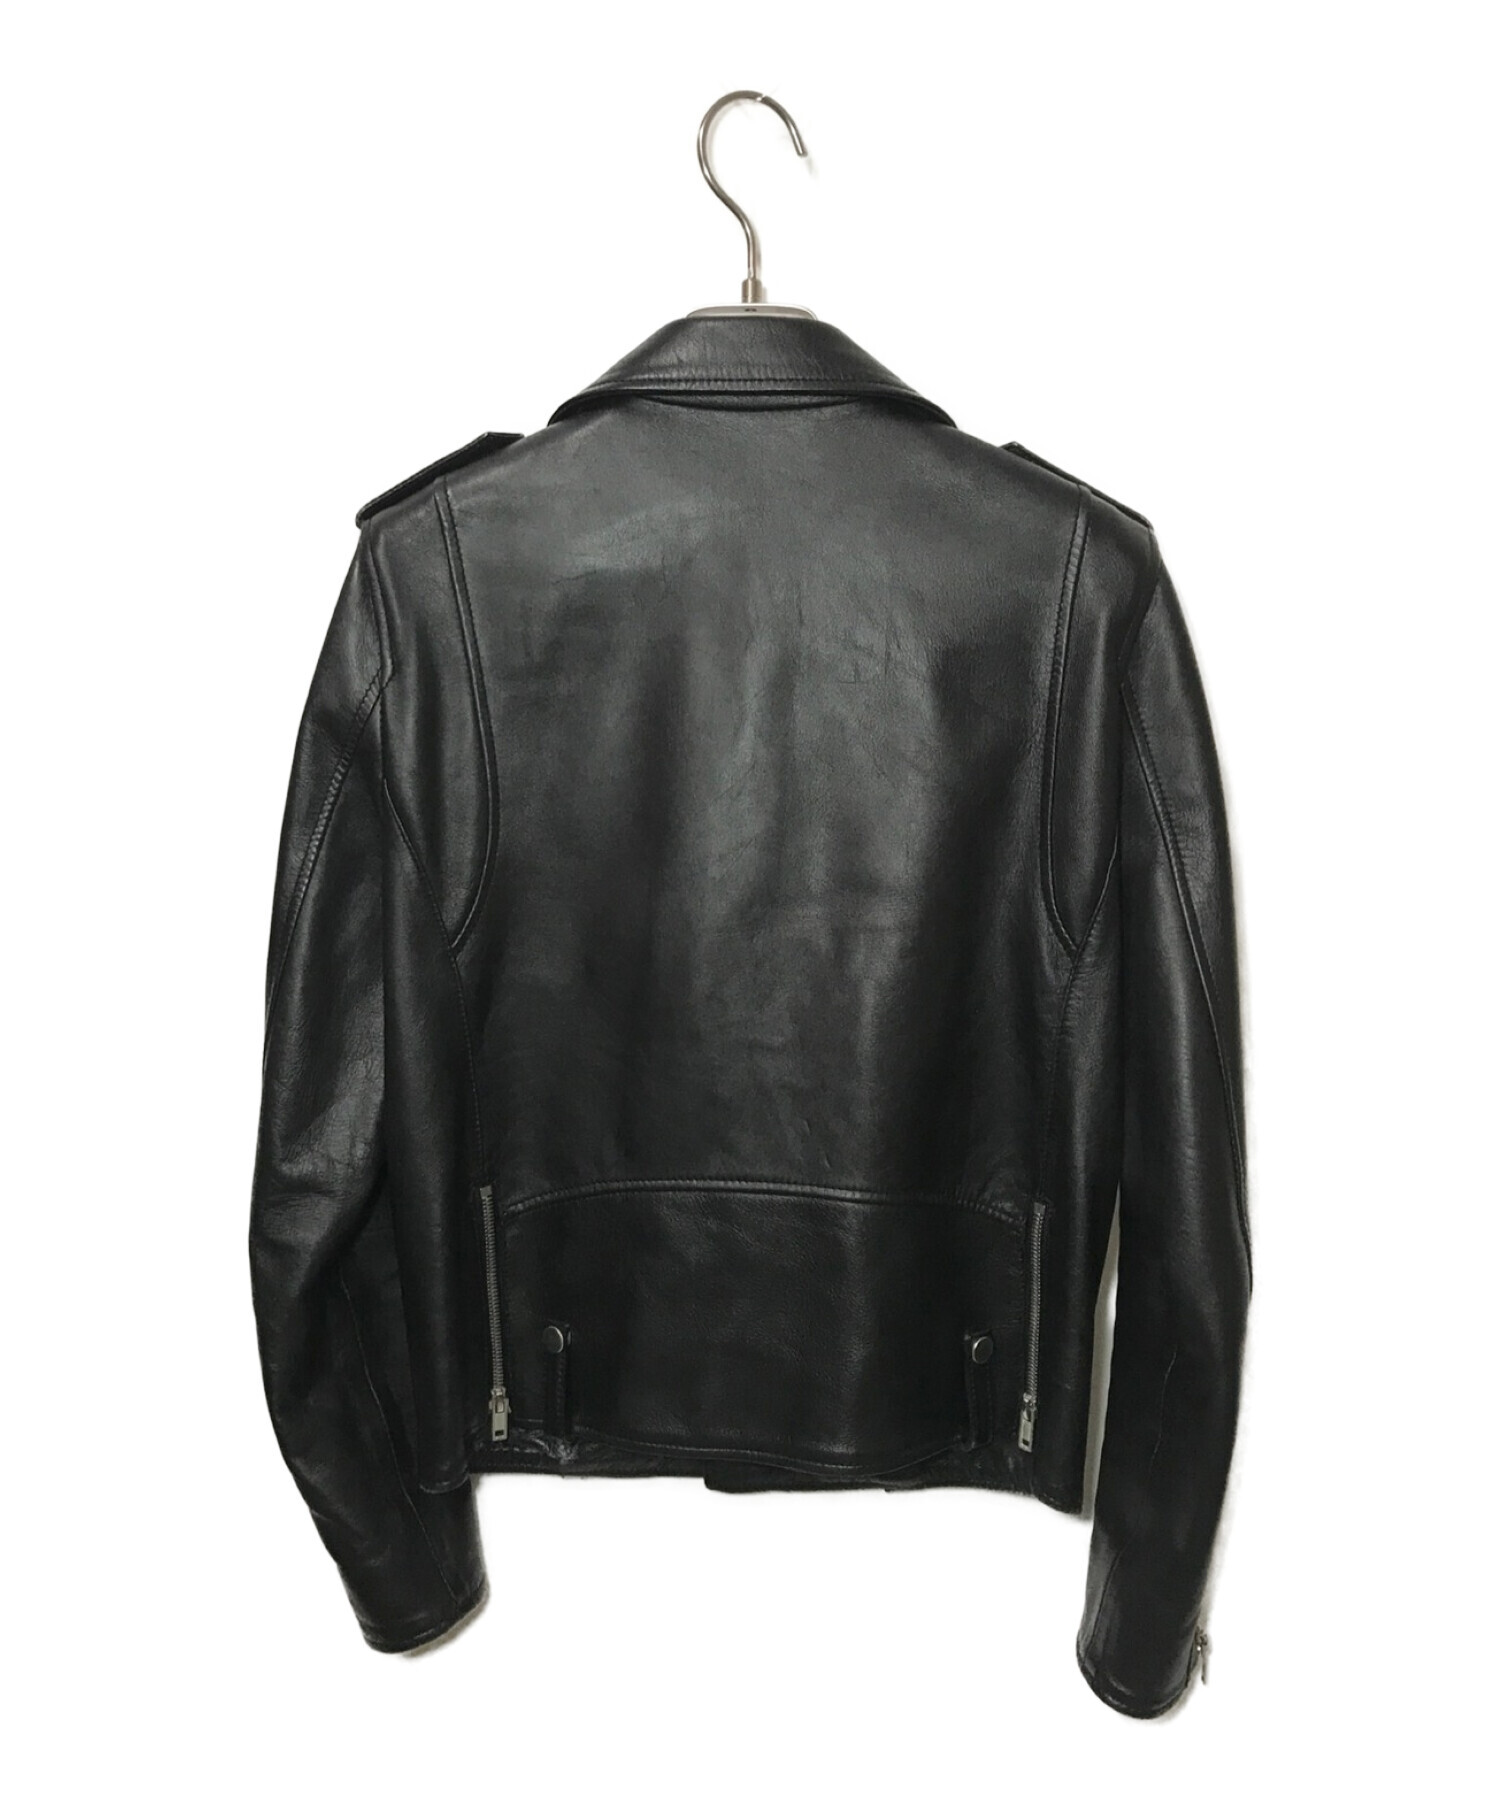 MACPHEE (マカフィー) ライダースジャケット ブラック サイズ:36